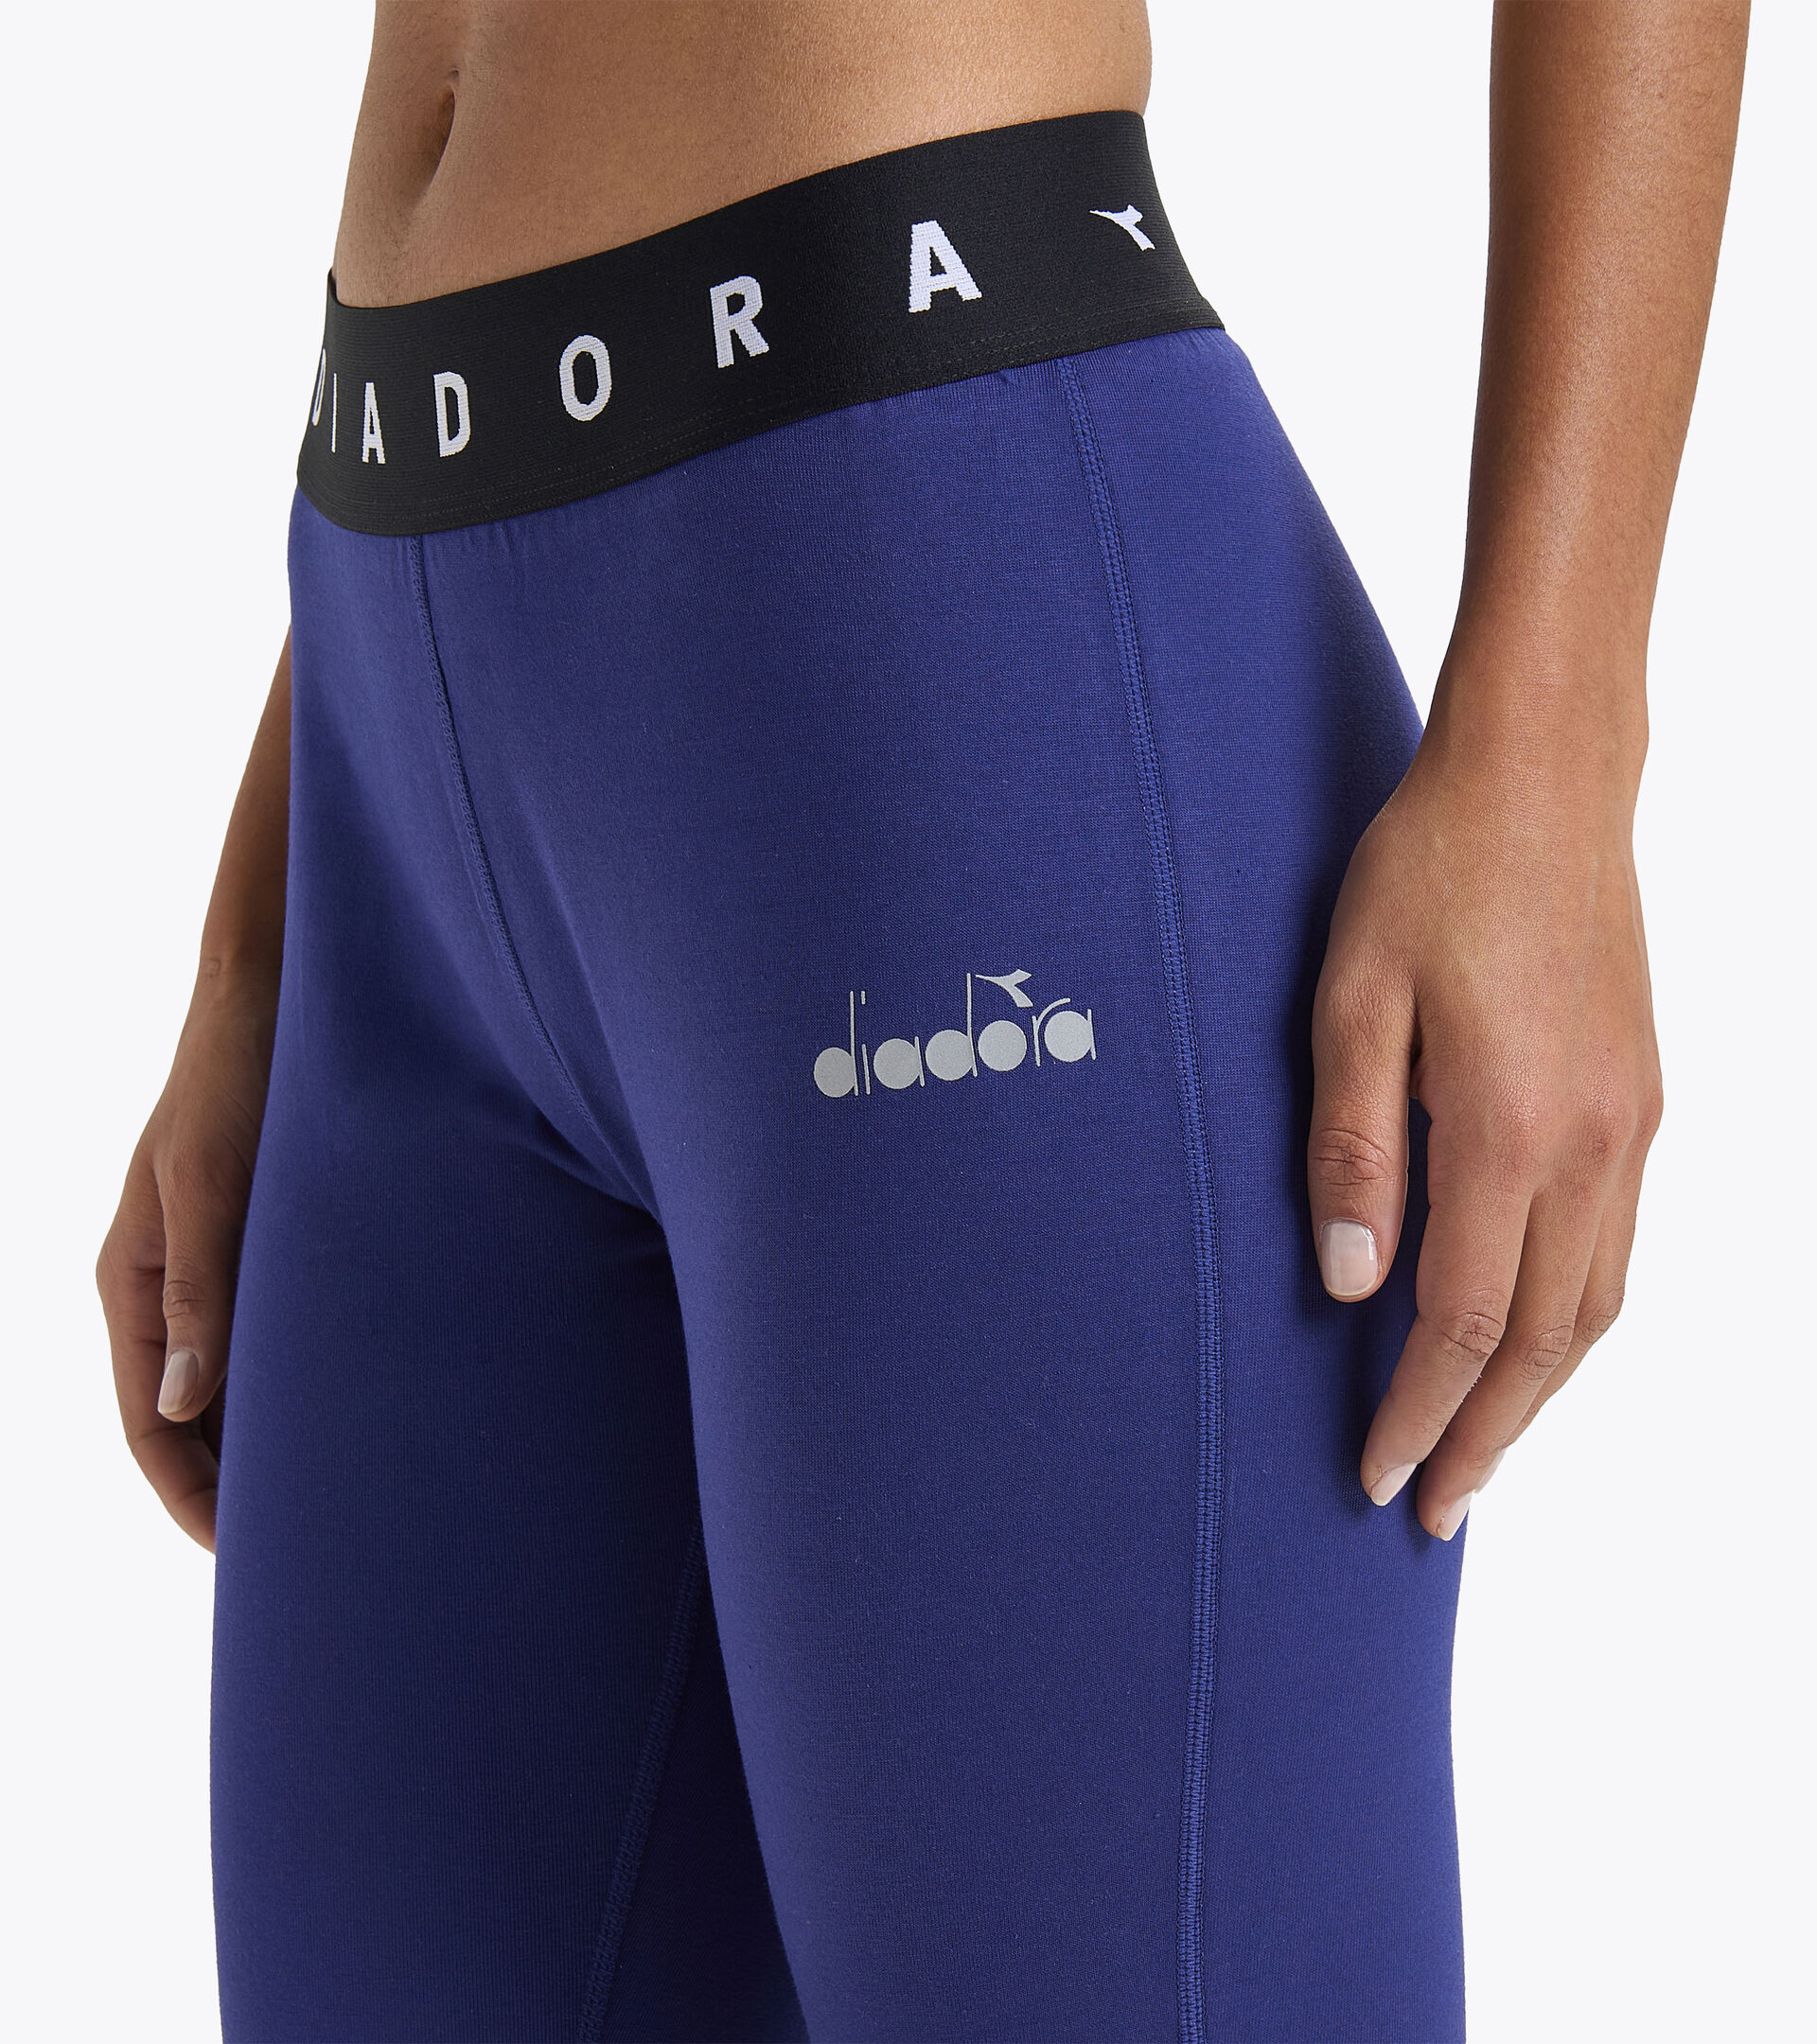 L. 7/8 STC LEGGINGS BE ONE Running leggings - Women - Diadora Online Store  CA